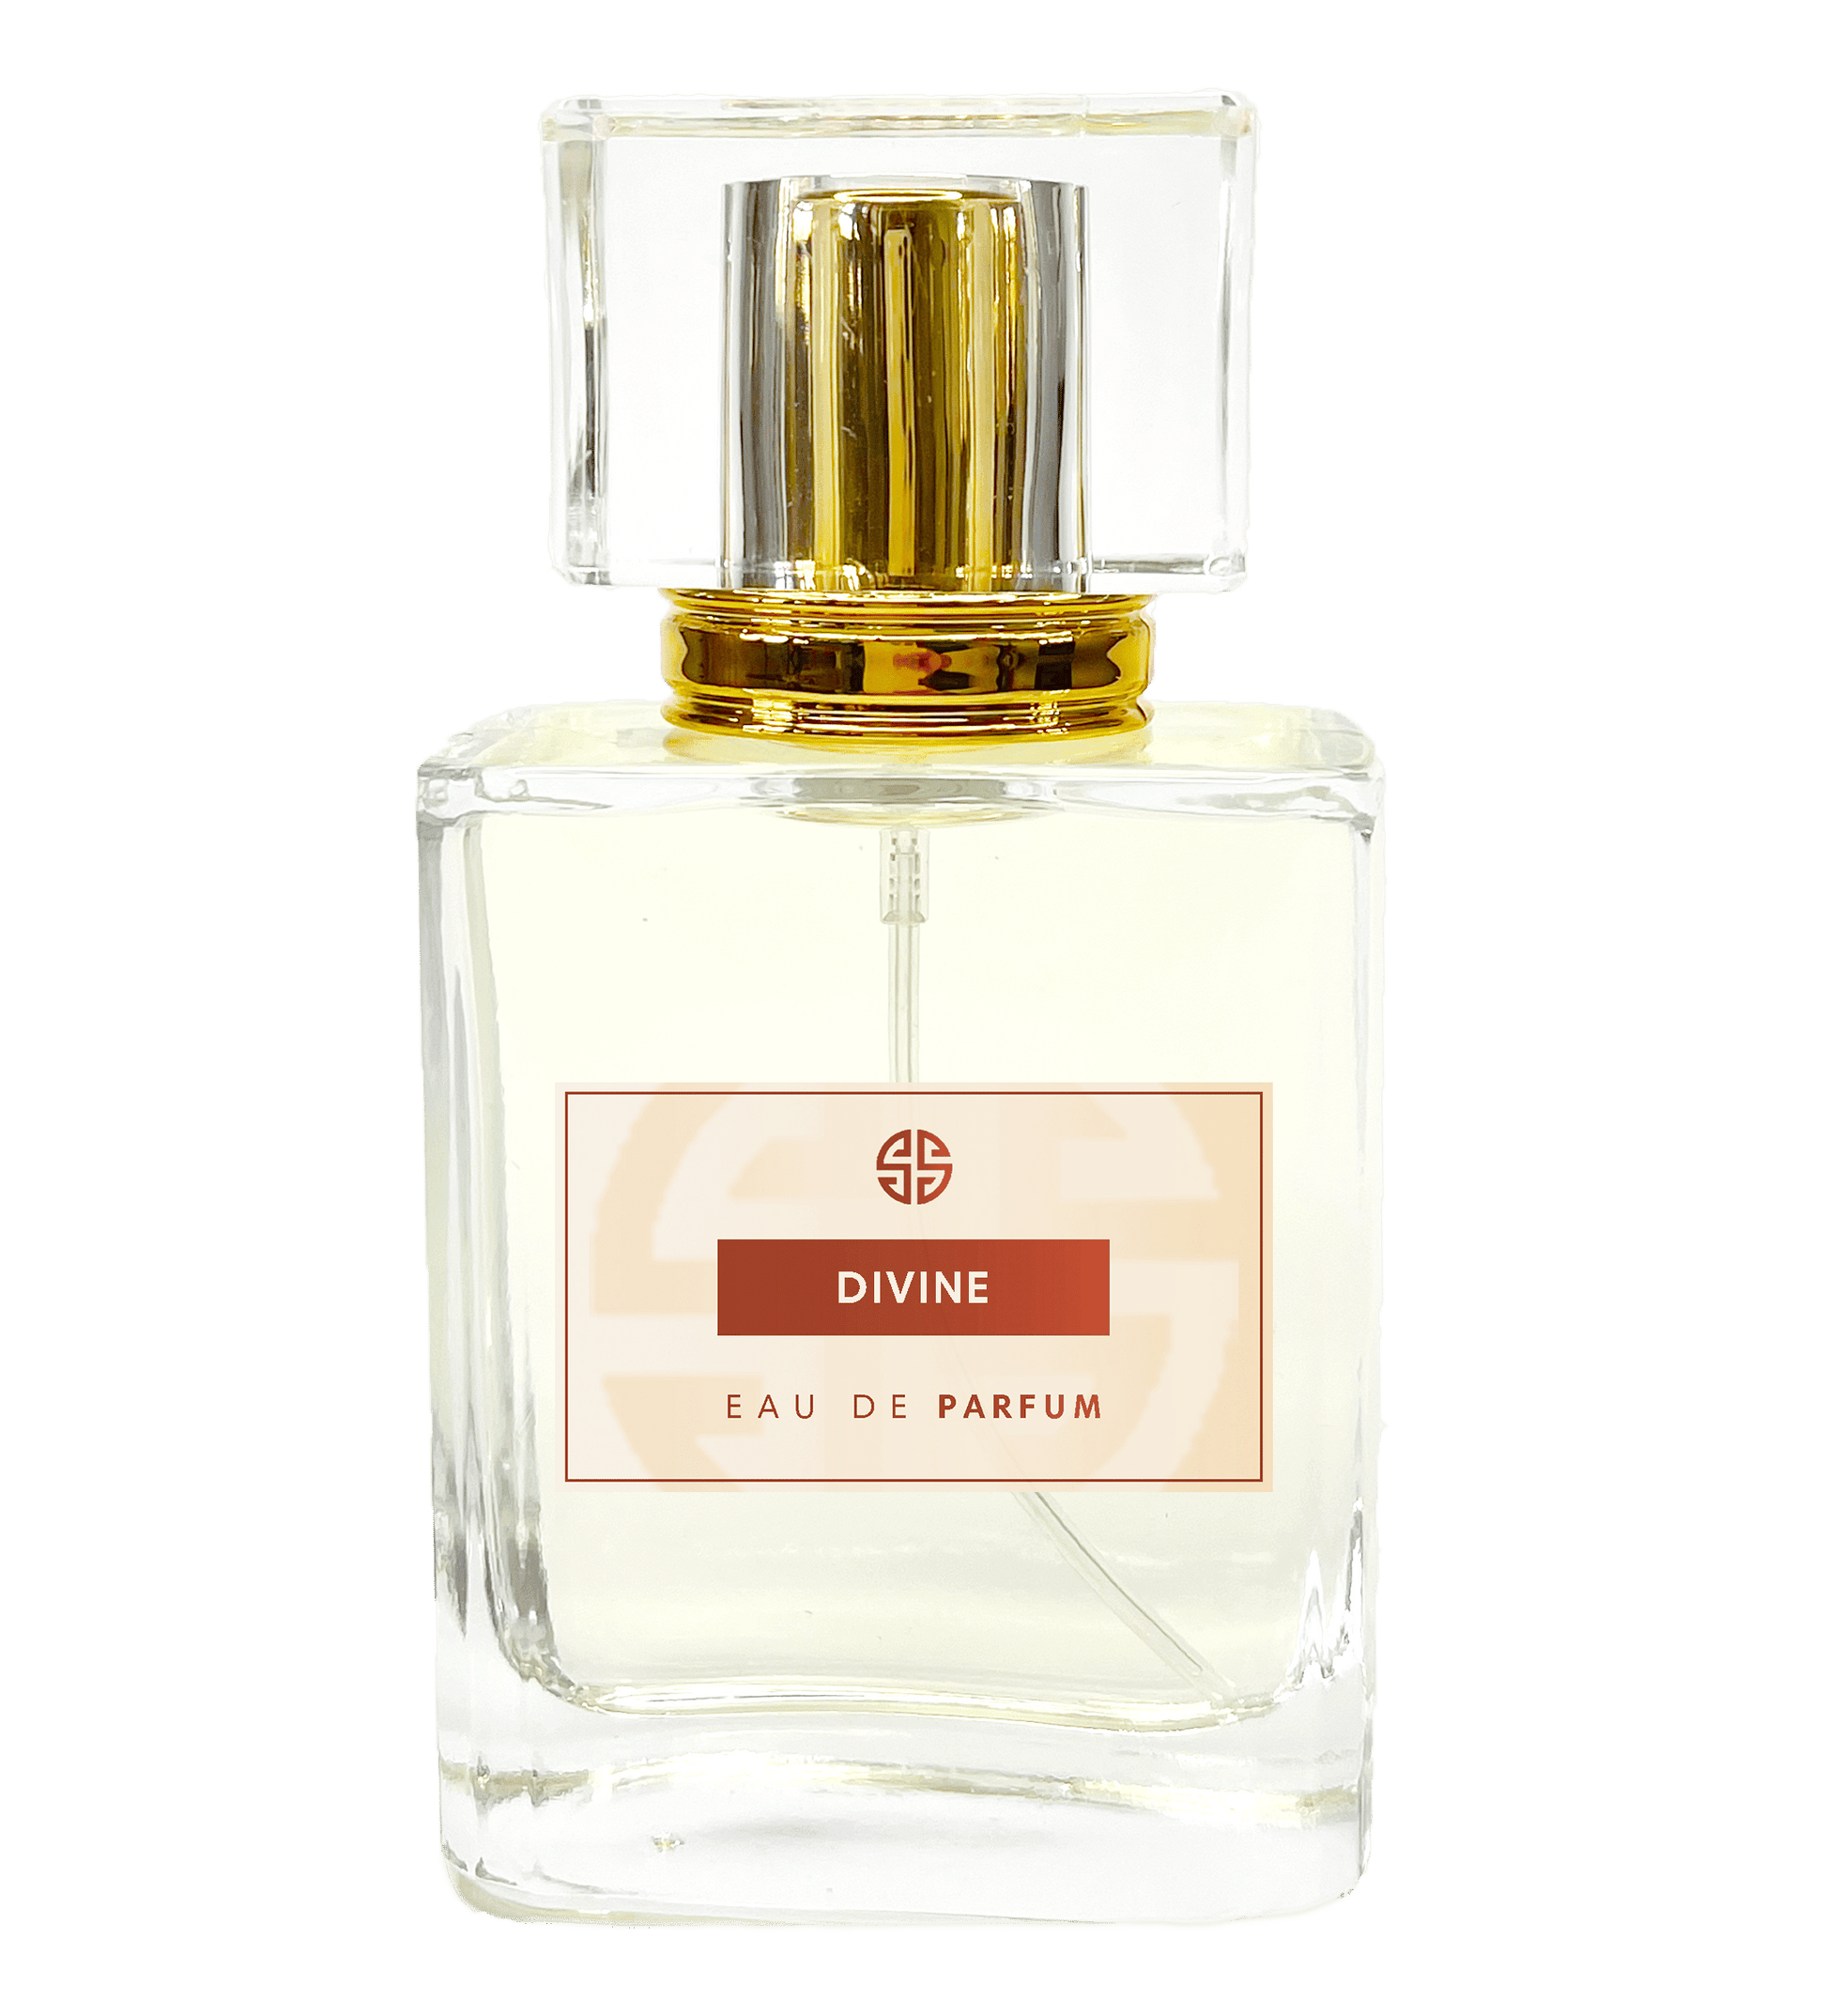 Angel's Share parfum - Similar Scent DIVINE - undefined